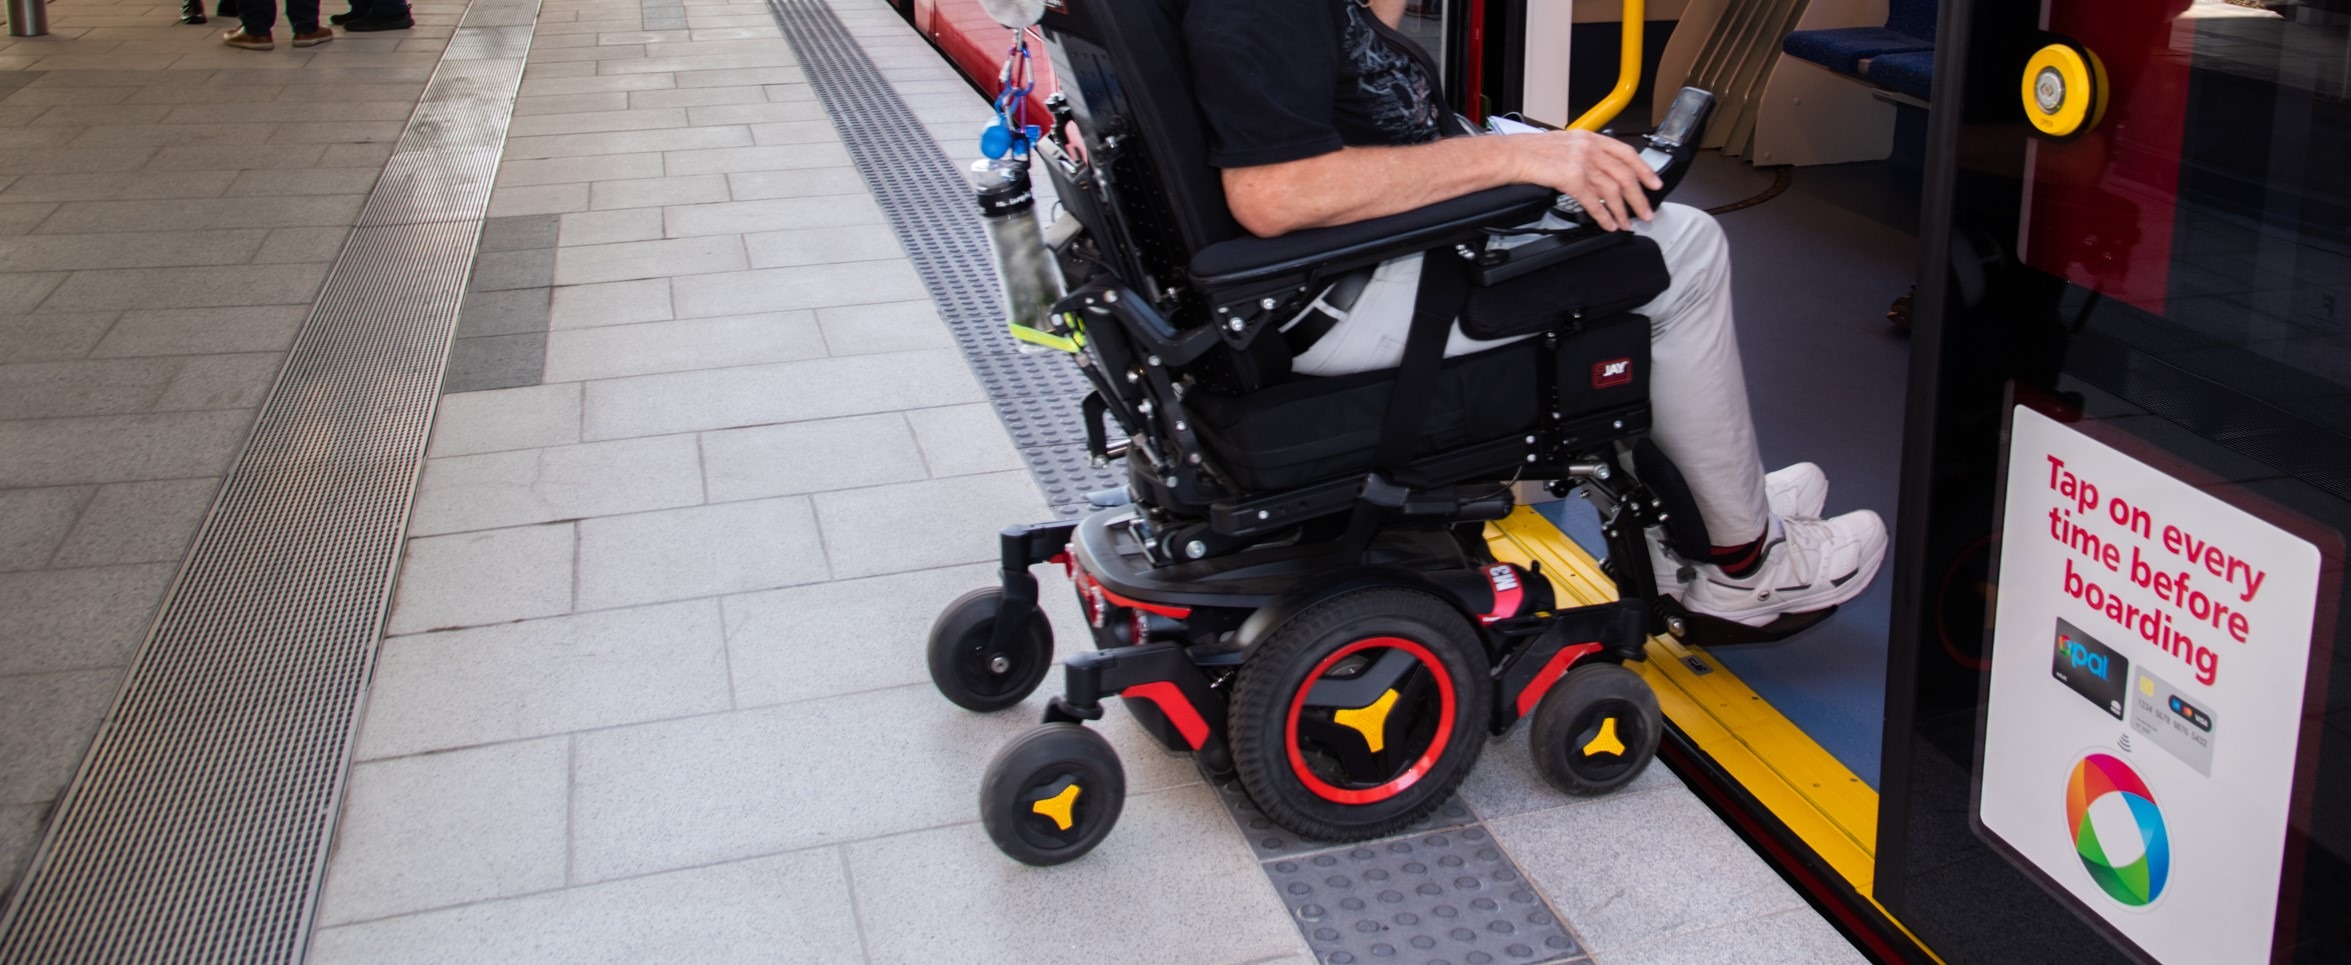 Passenger in a wheel chair boarding the Light Rail